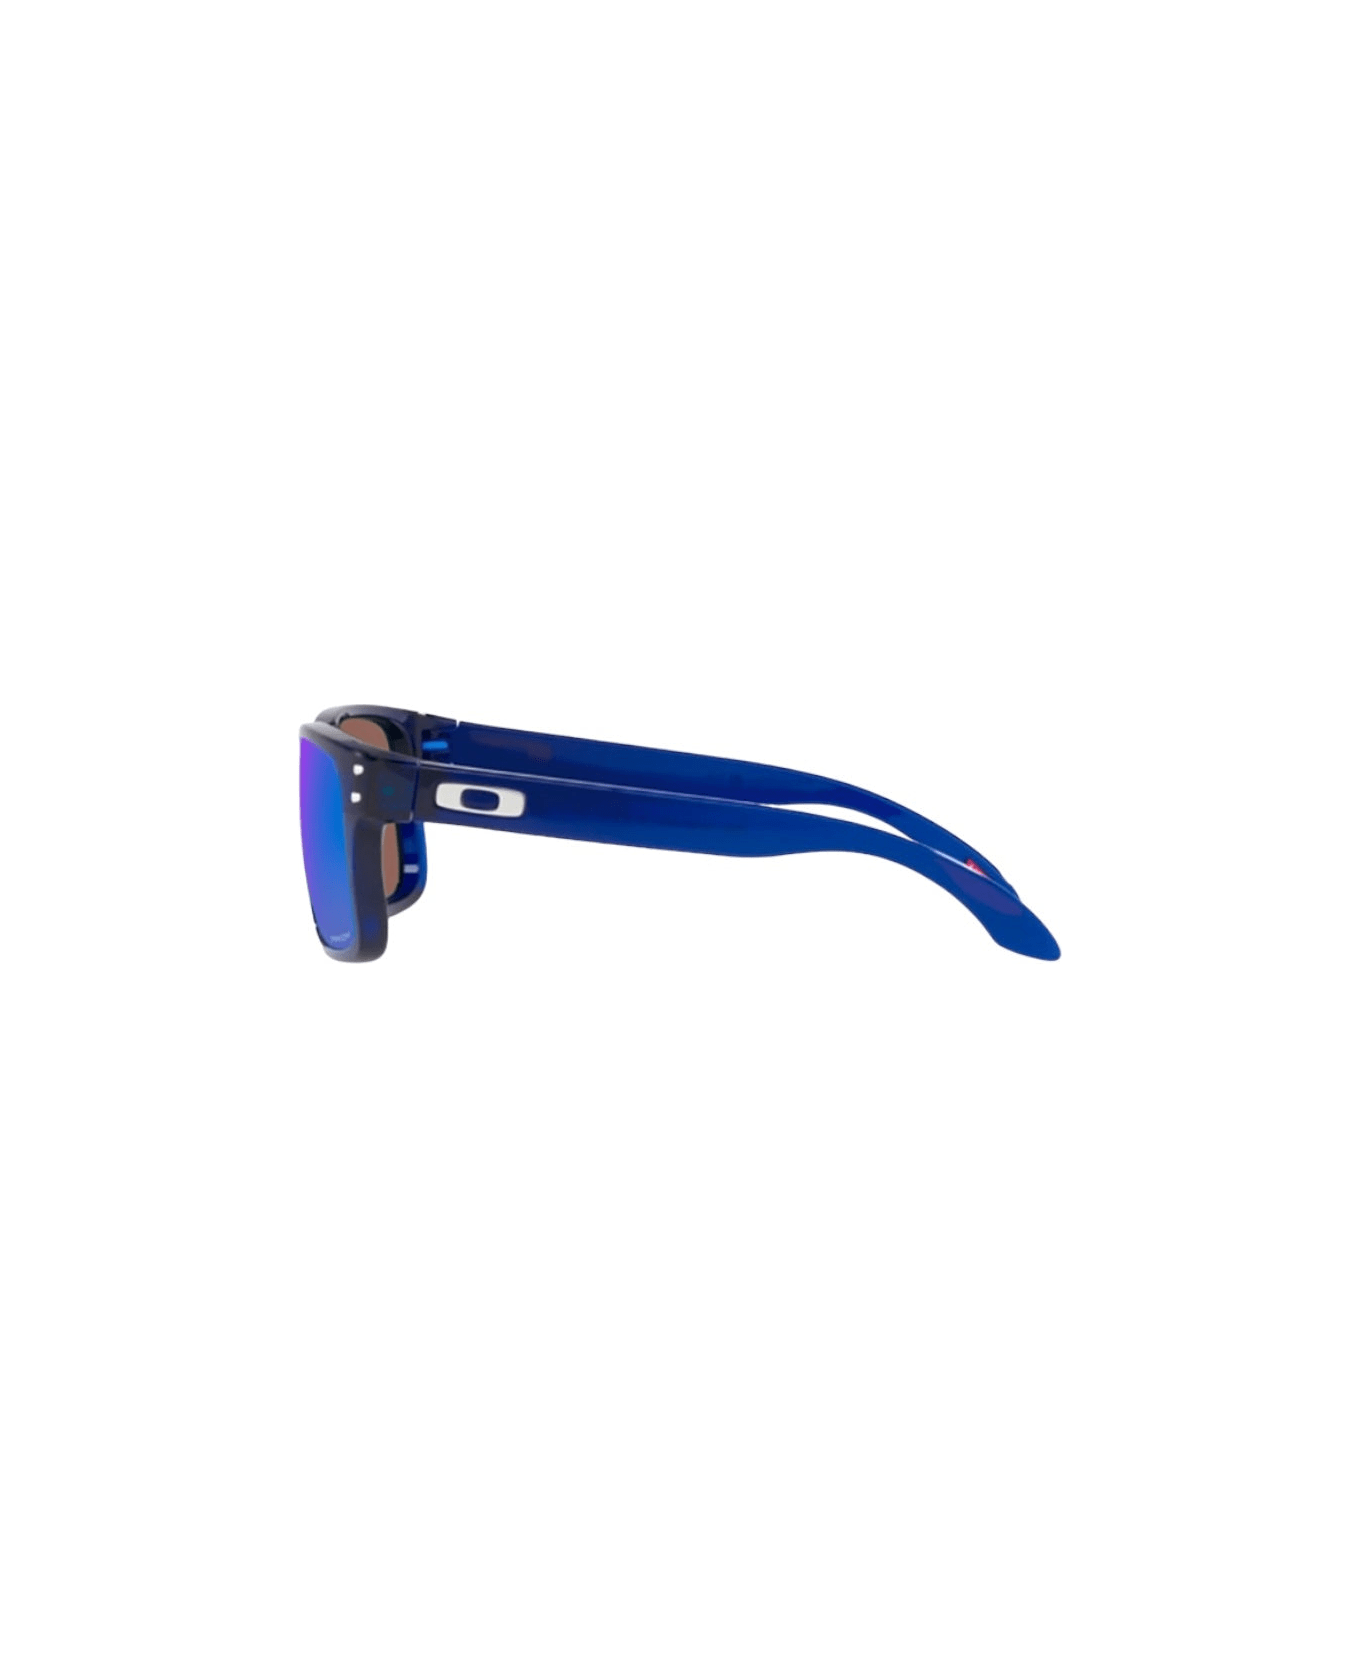 Oakley Holbrook Xs - 9007 - Blu Sunglasses